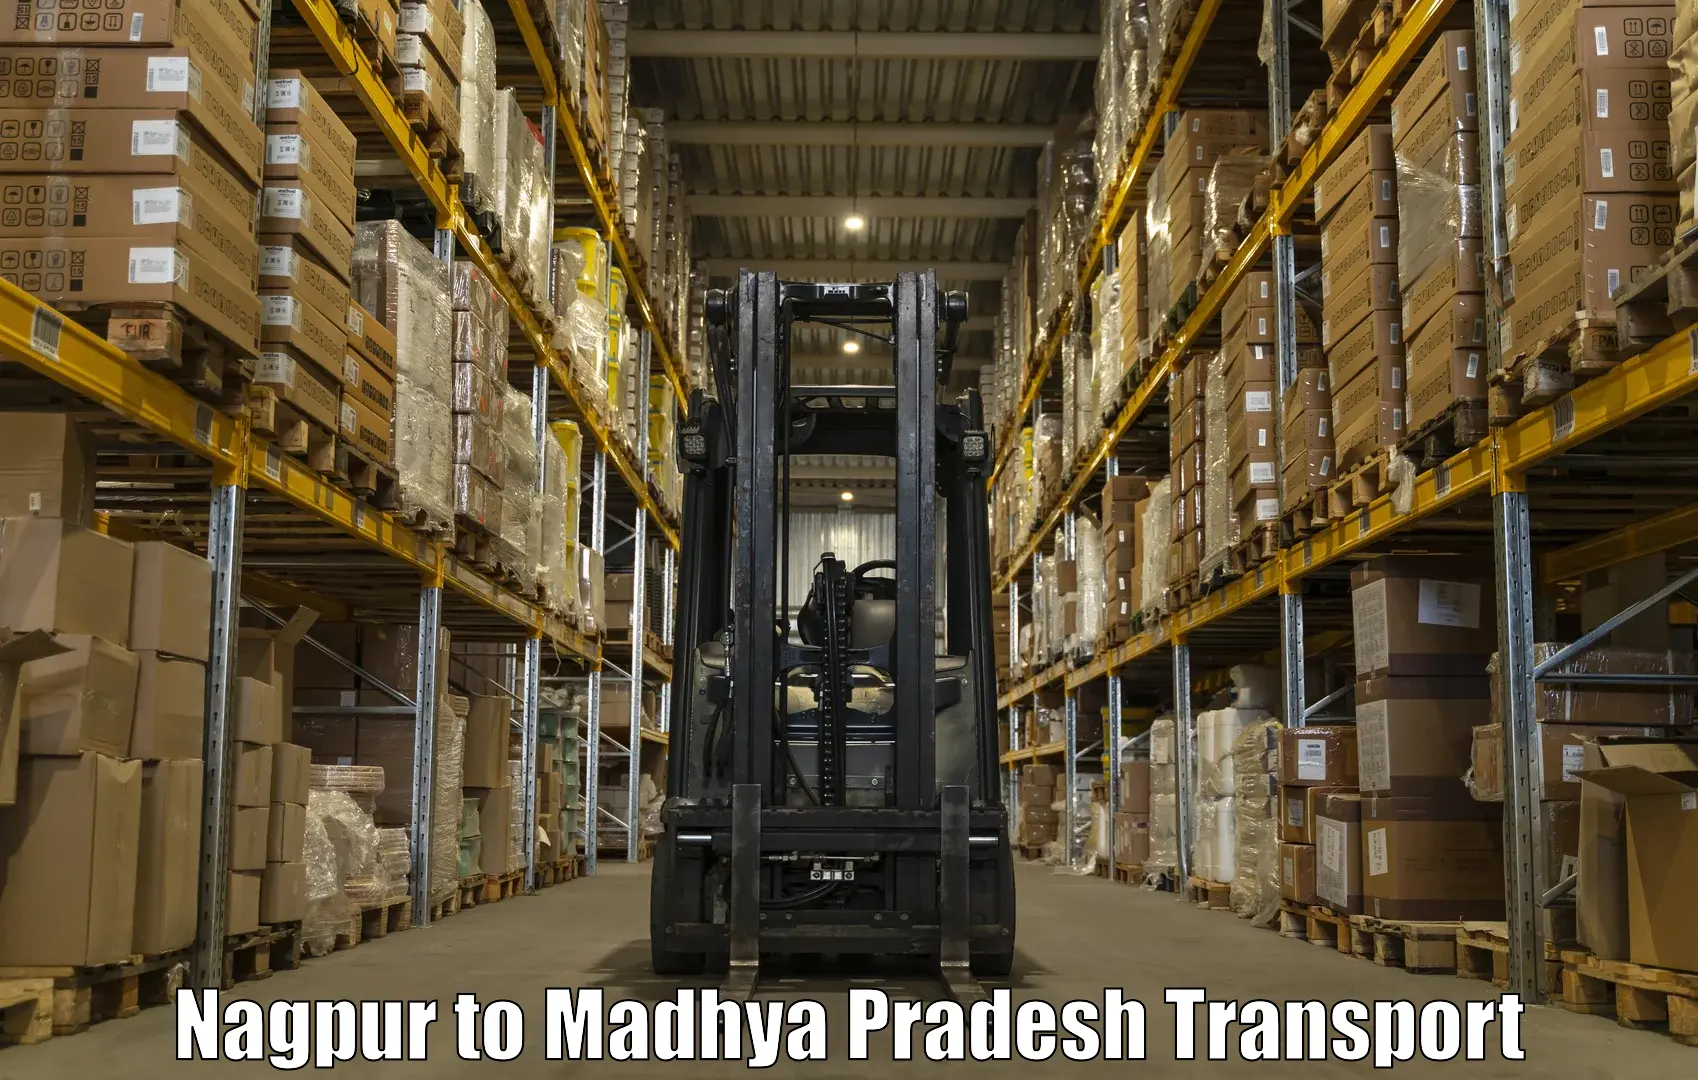 Transport bike from one state to another Nagpur to Madhya Pradesh